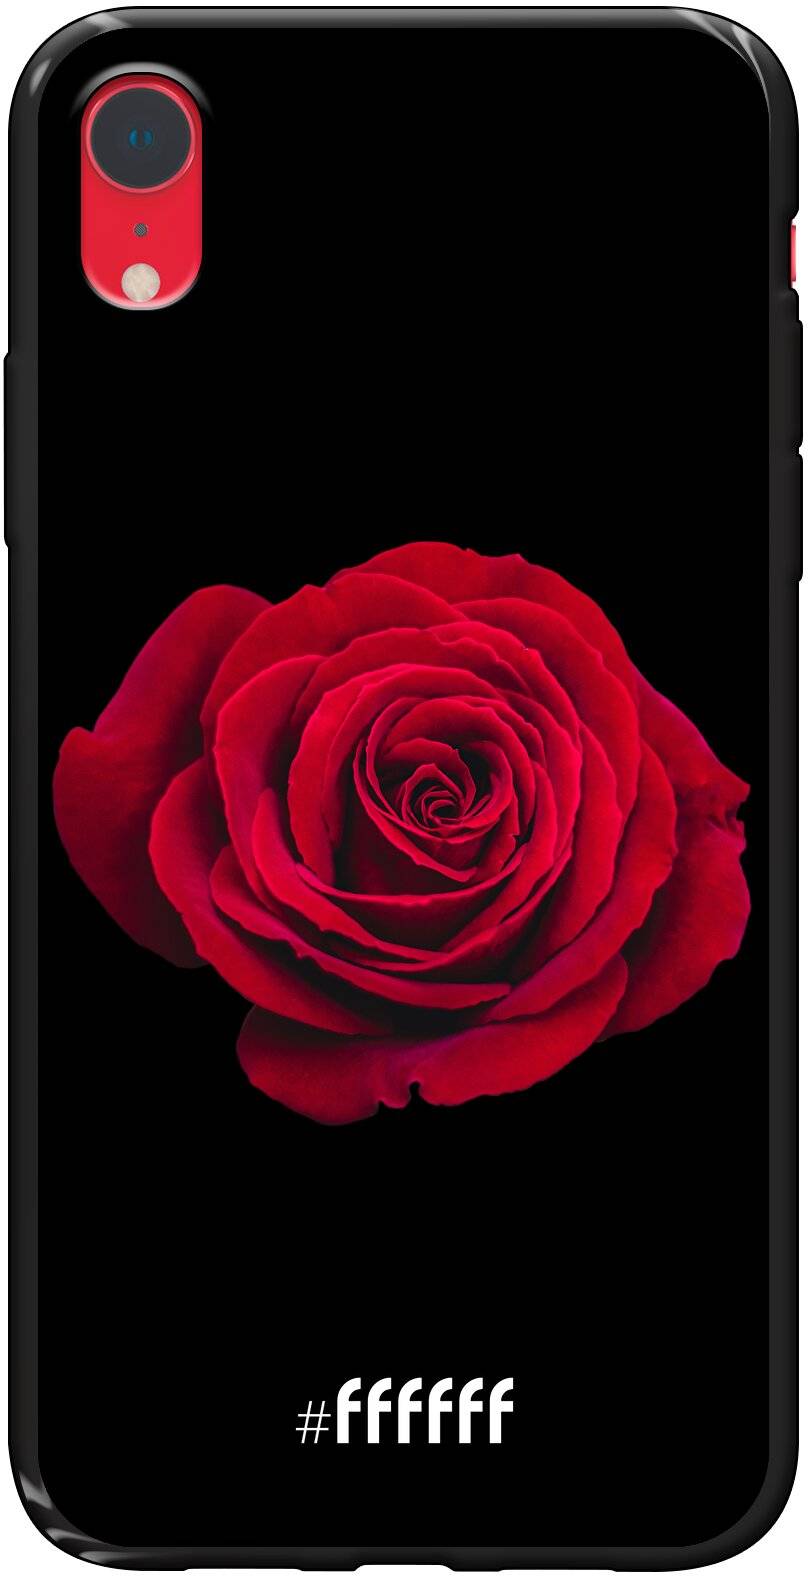 Radiant Rose iPhone Xr